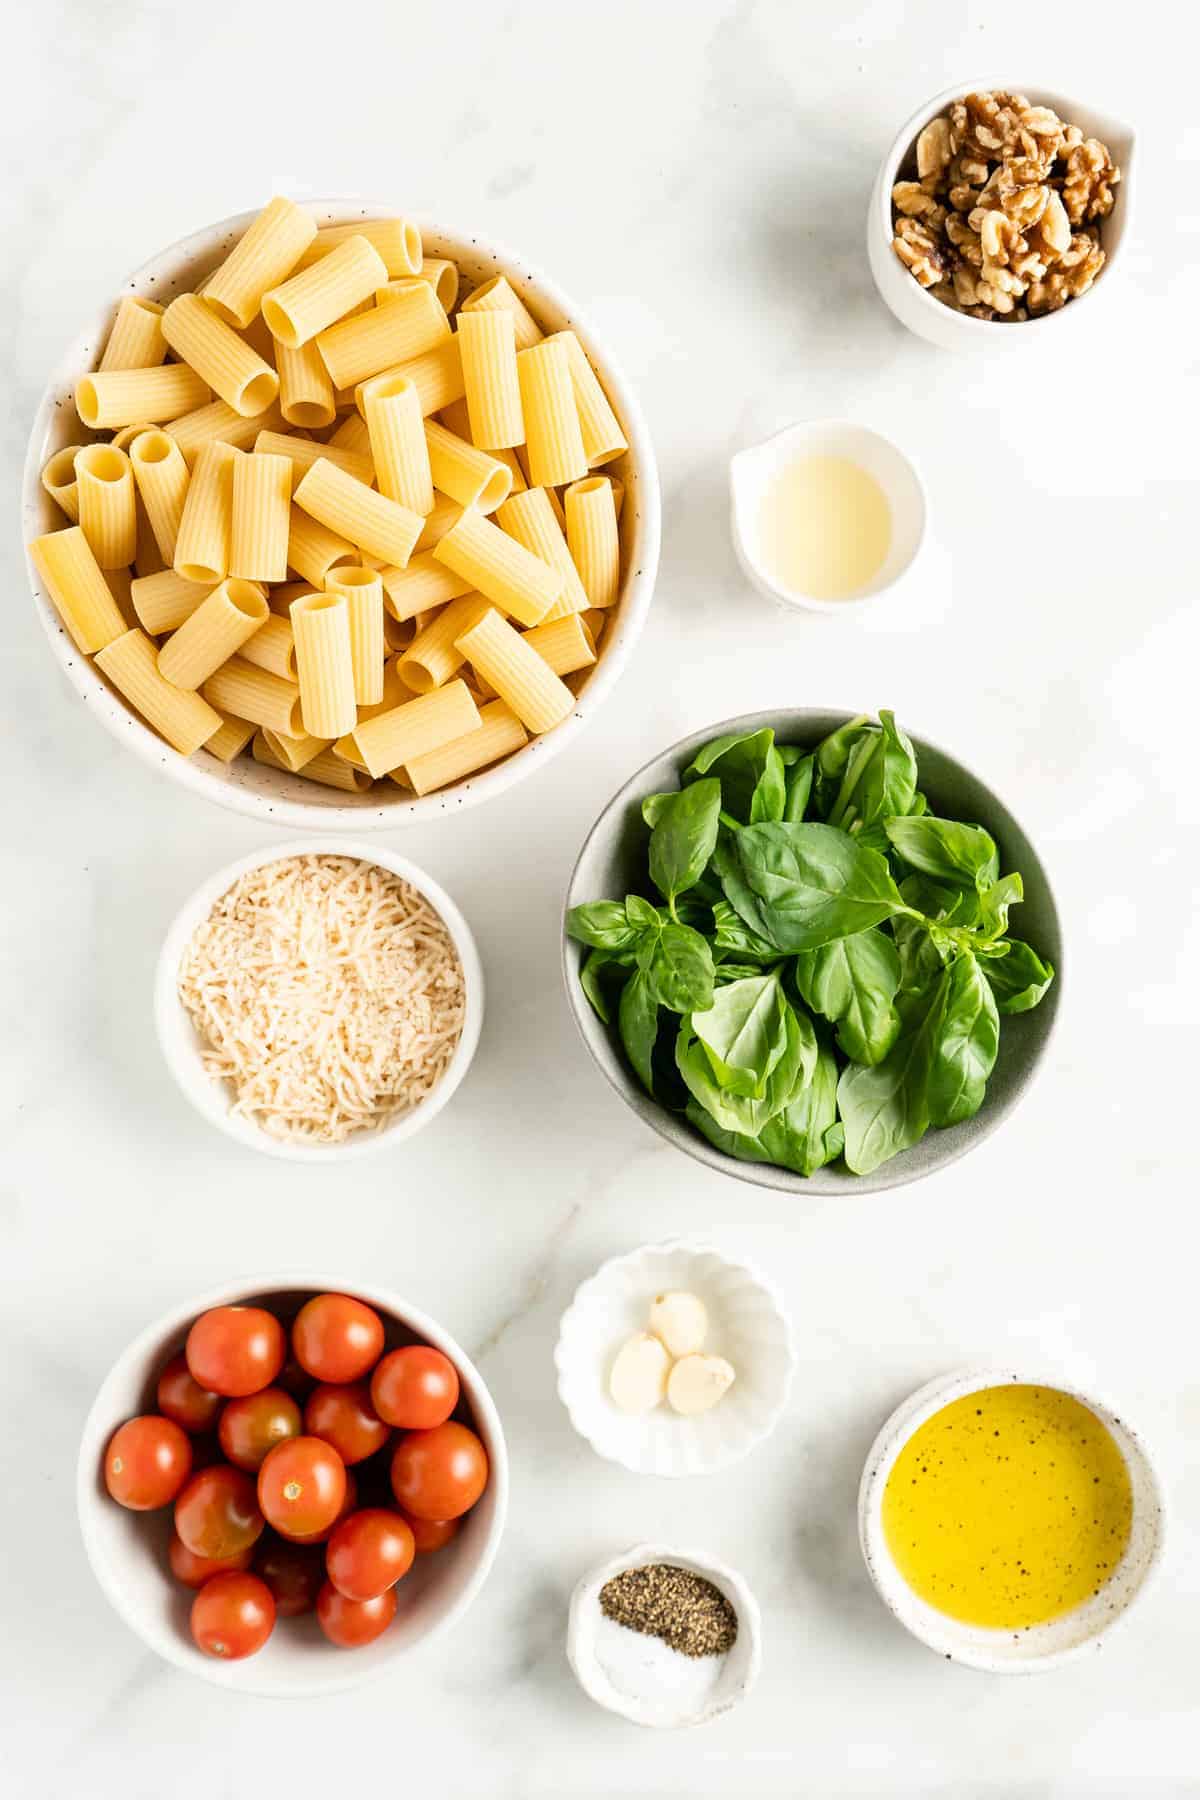 Overhead view of ingredients for pesto pasta